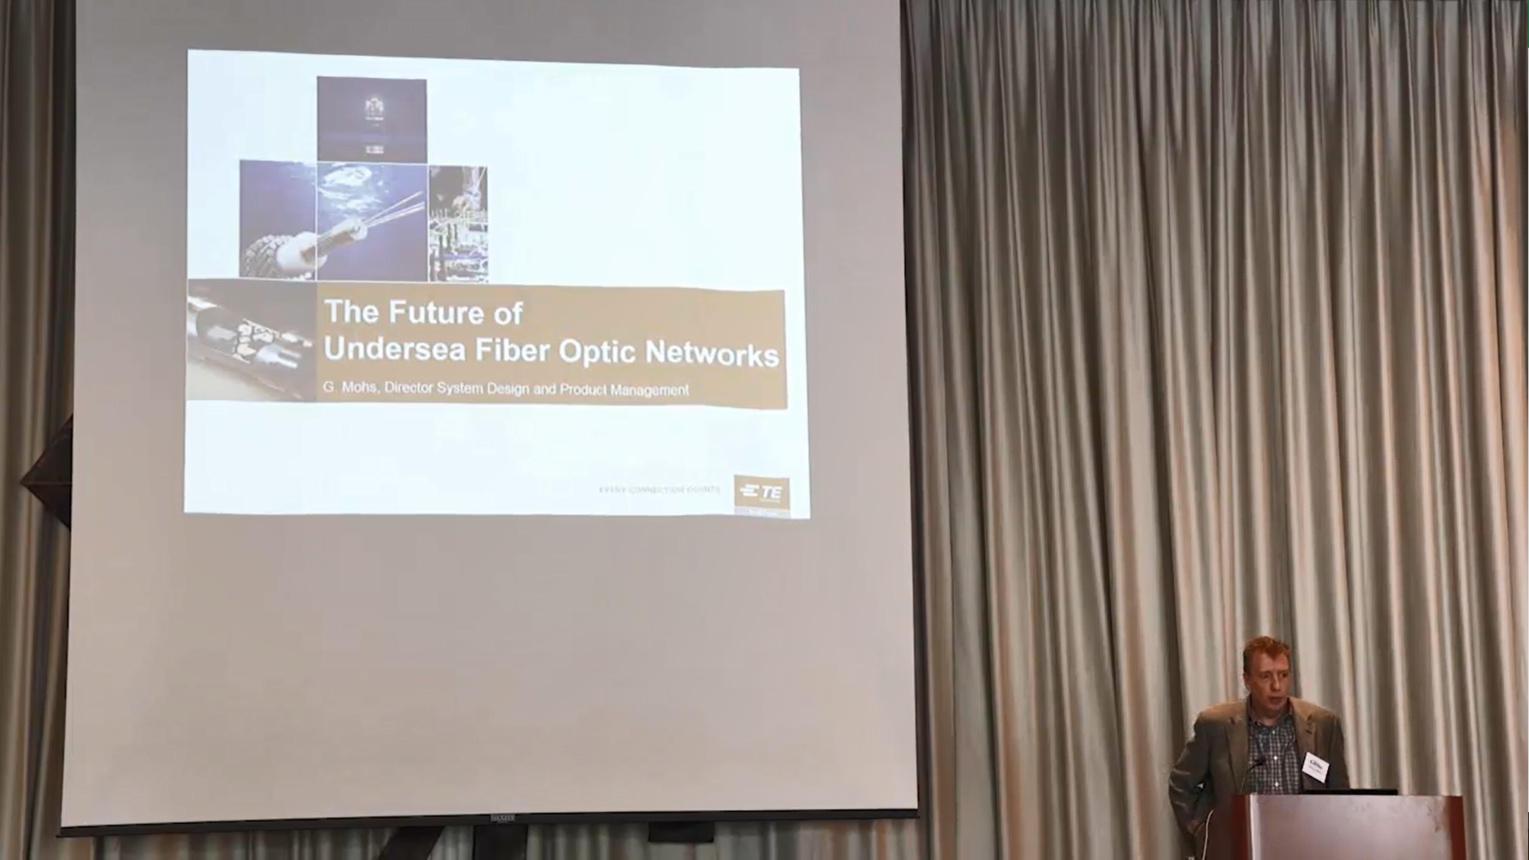 The Future of Undersea Fiber Optic Networks